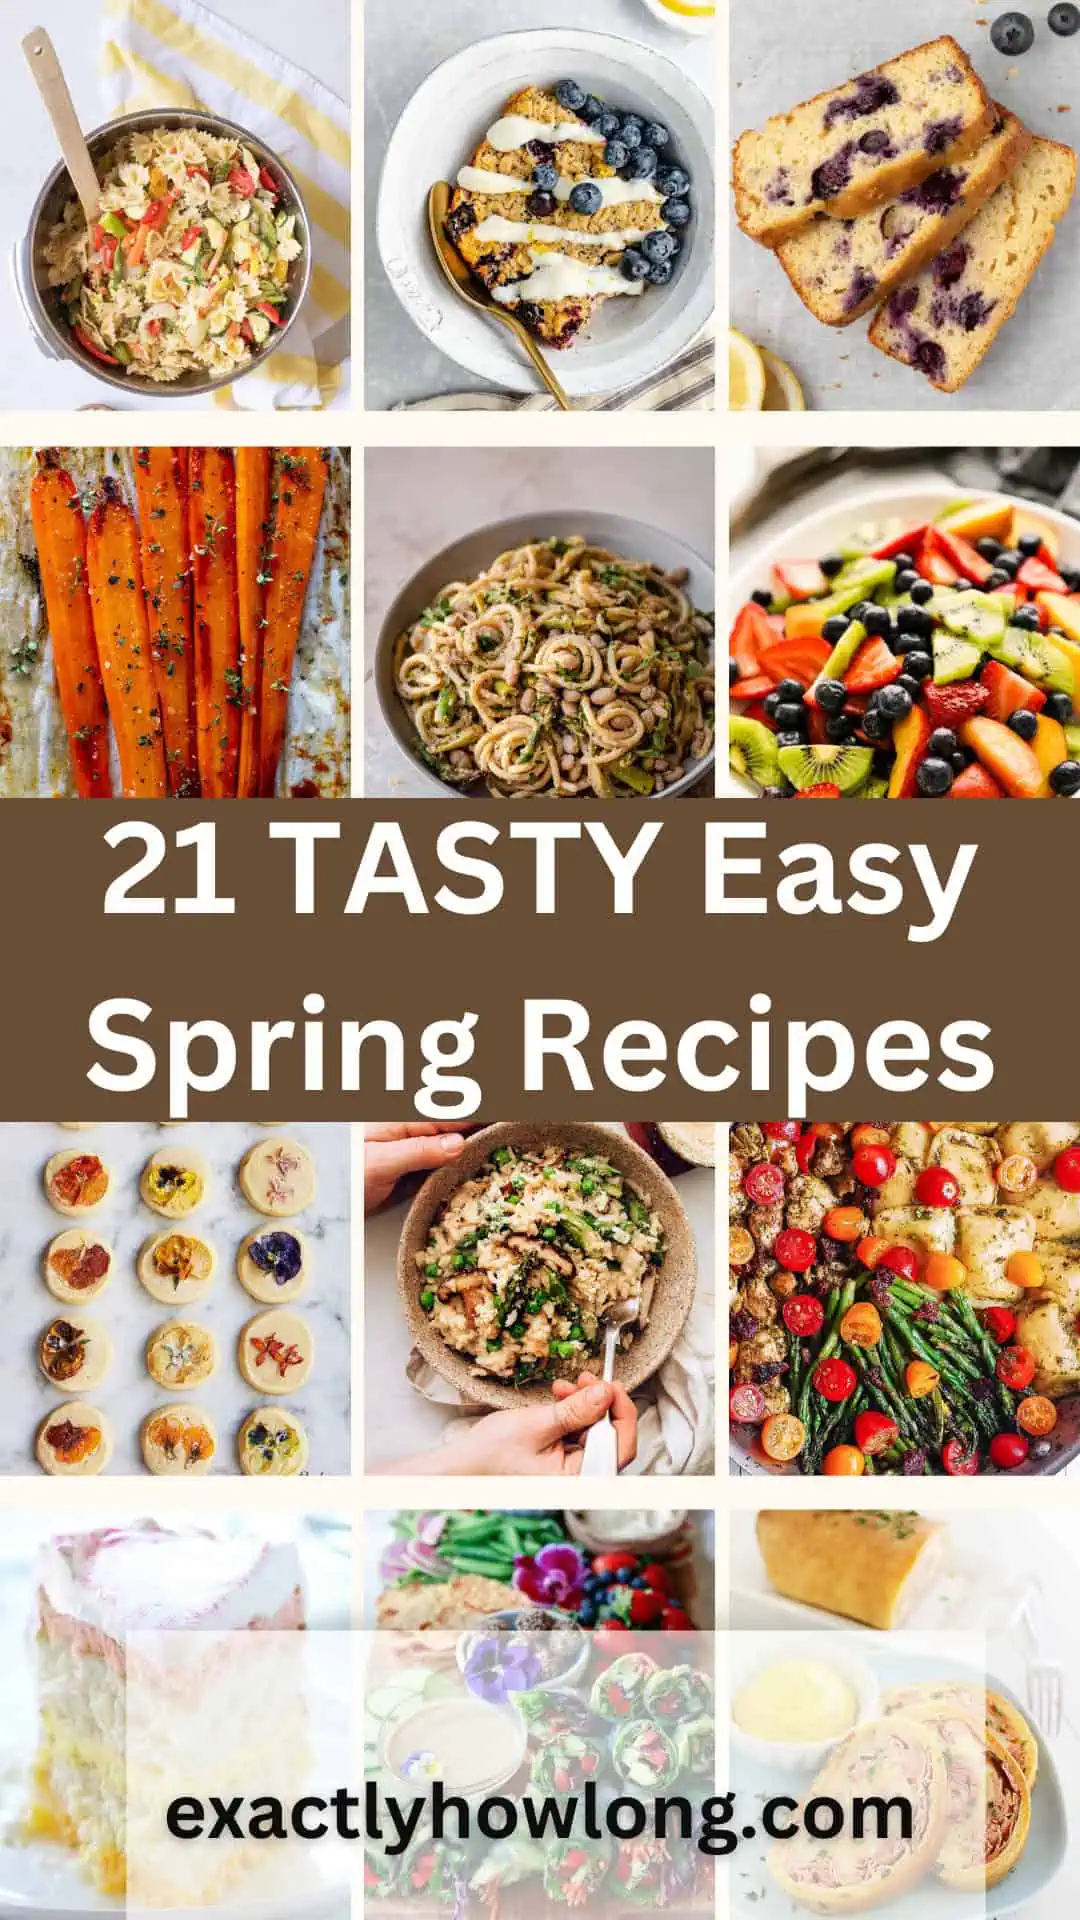 21 Tasty Easy Spring Recipes 2